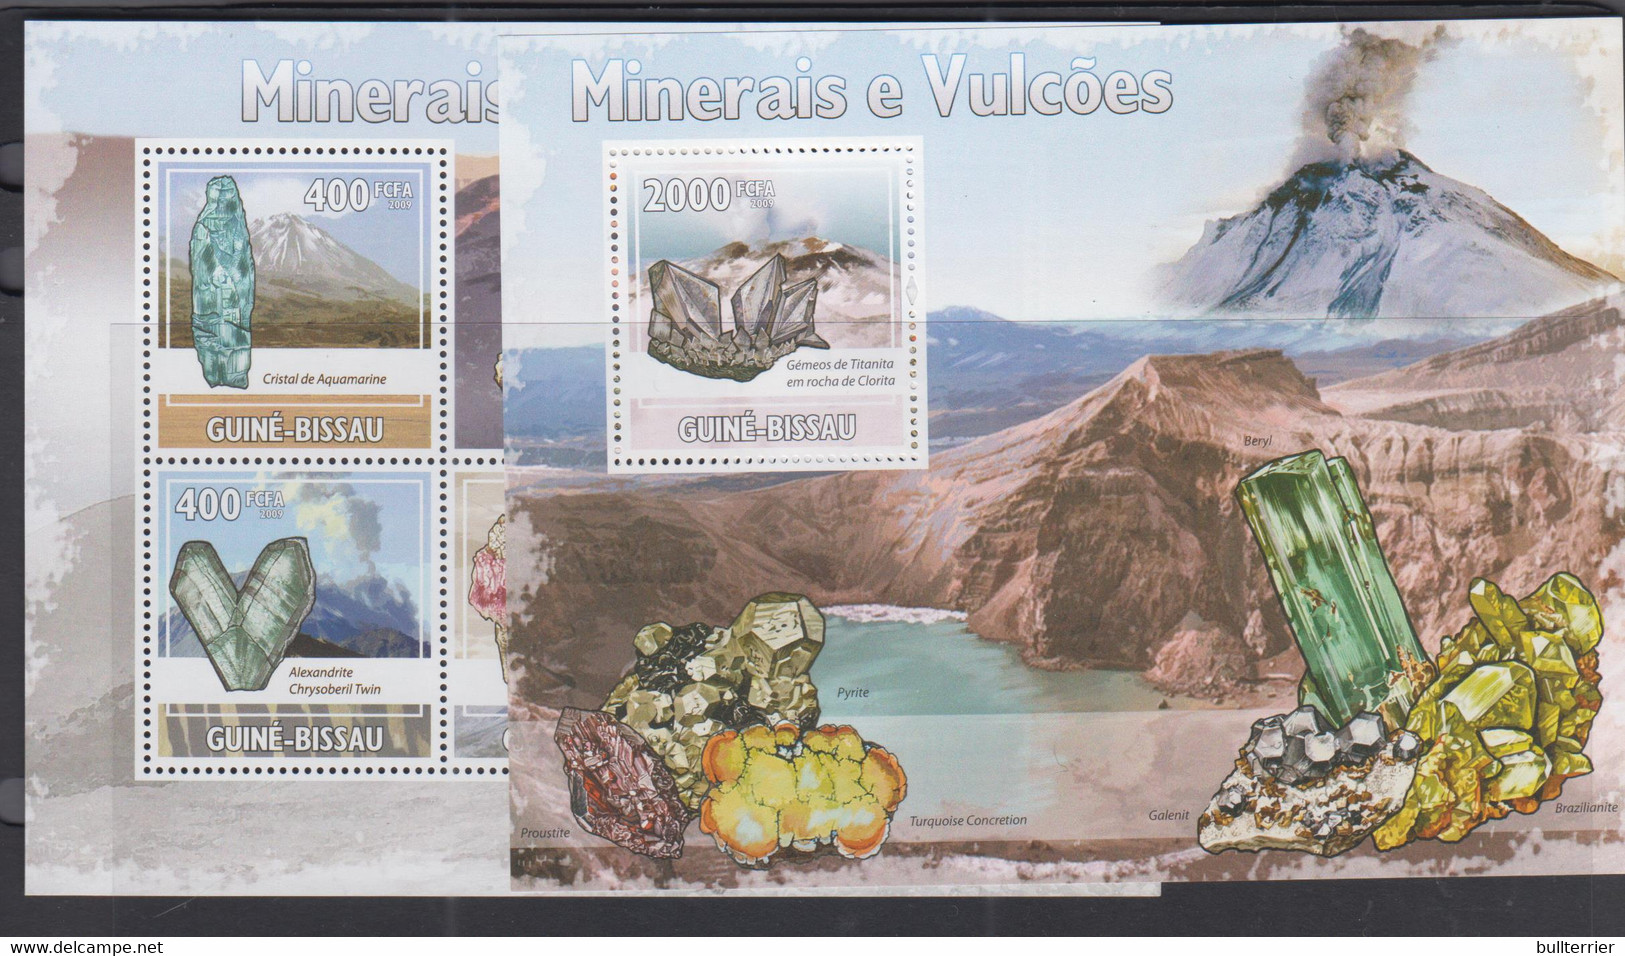 VOLCANOES - GUINEA BISSAU - 2009 - MINERALS & VOLCANOES SHEETLET OF 6 + S/SHEET  MINT NEVER HINGED - Vulkane